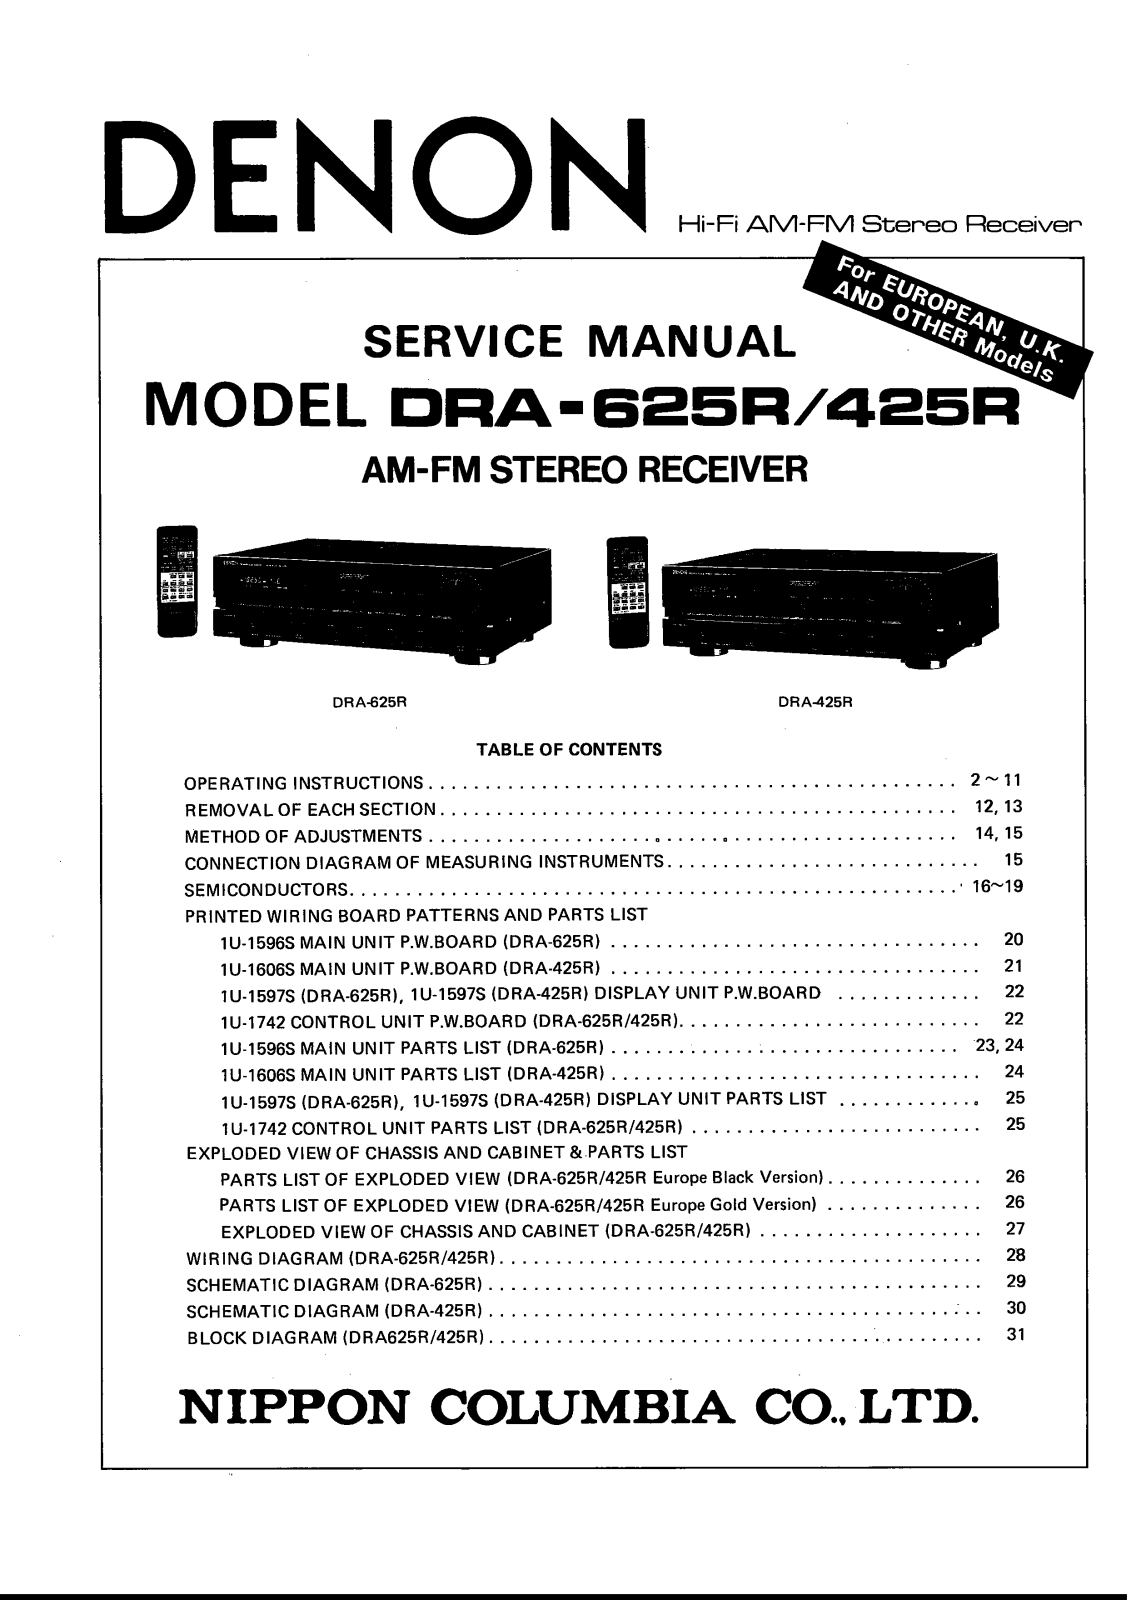 Denon DRA-625R, DRA-425R Service Manual